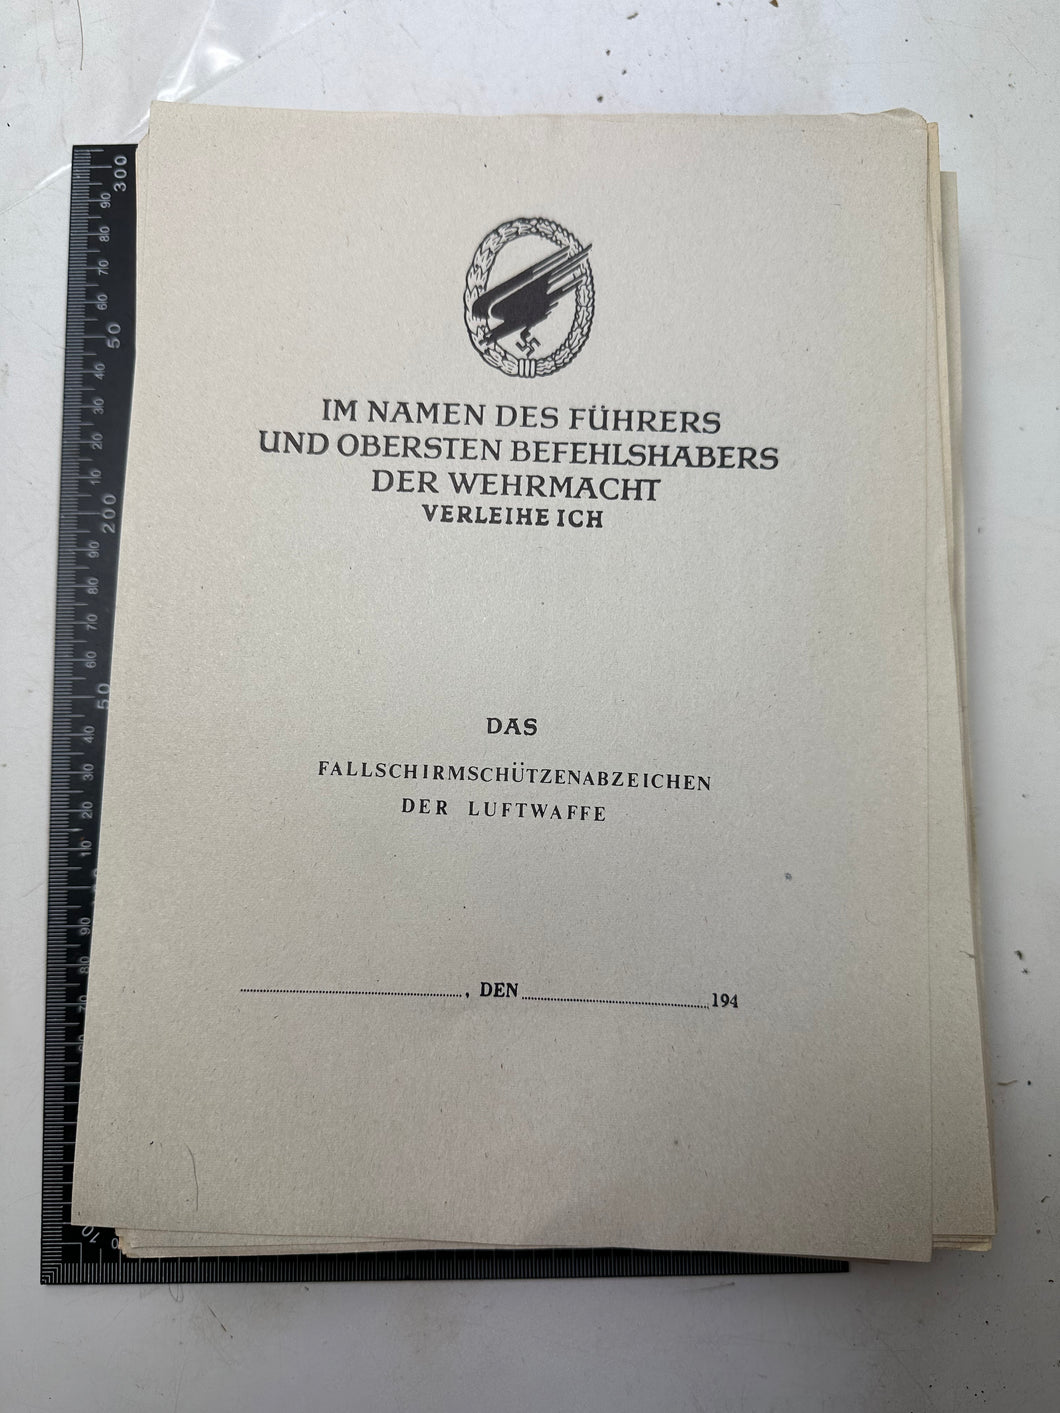 WW2 German Luftwaffe Parachute Award Certificate Reproduction